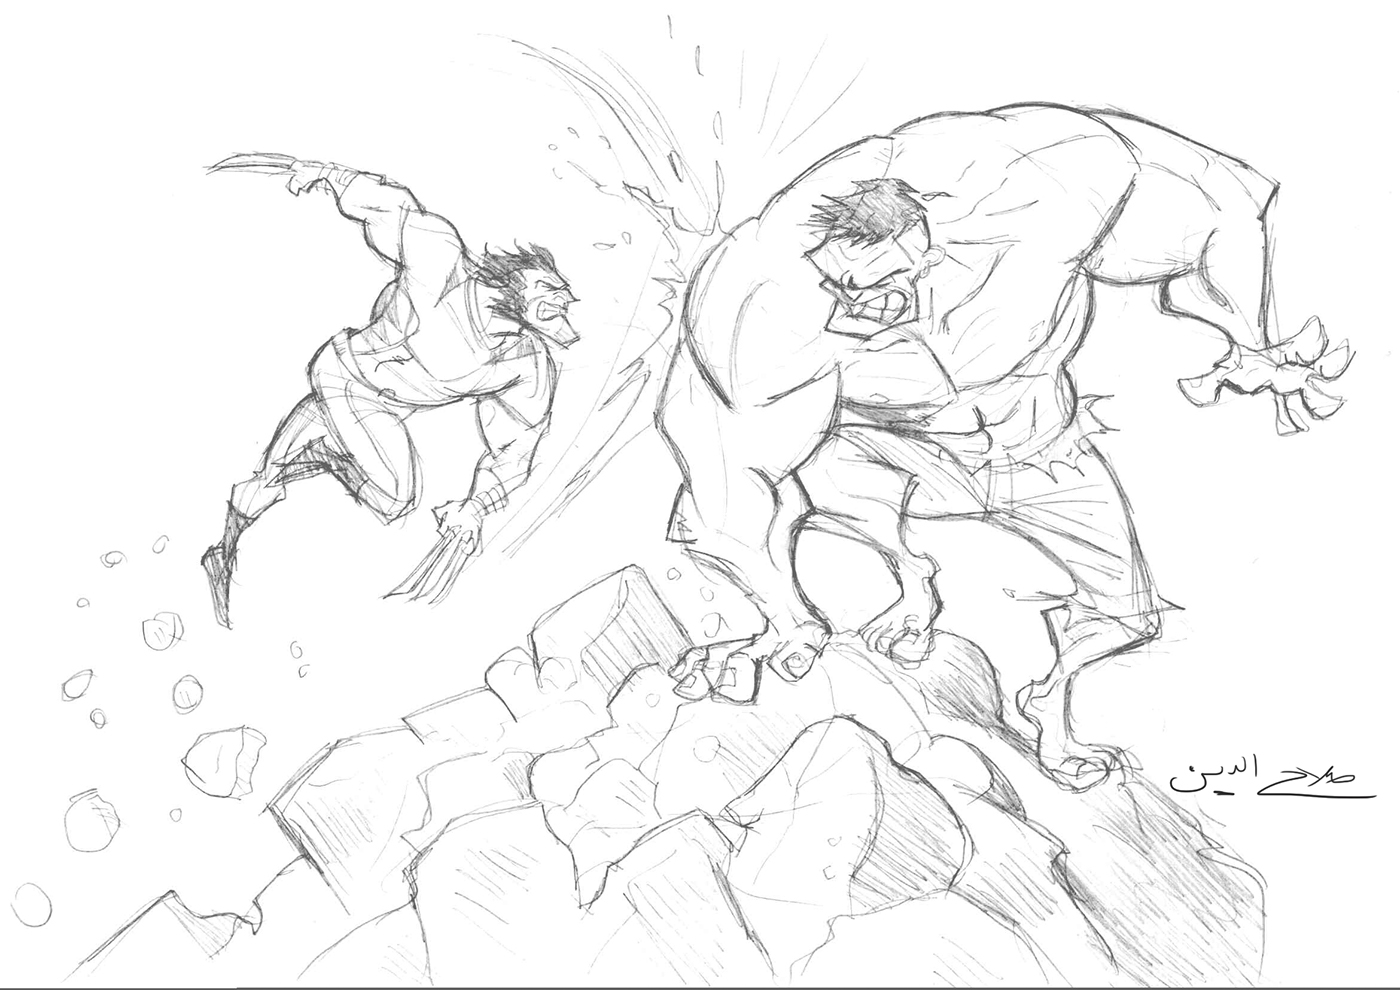 Hulk wolverine fight comics Avengers claws green rage